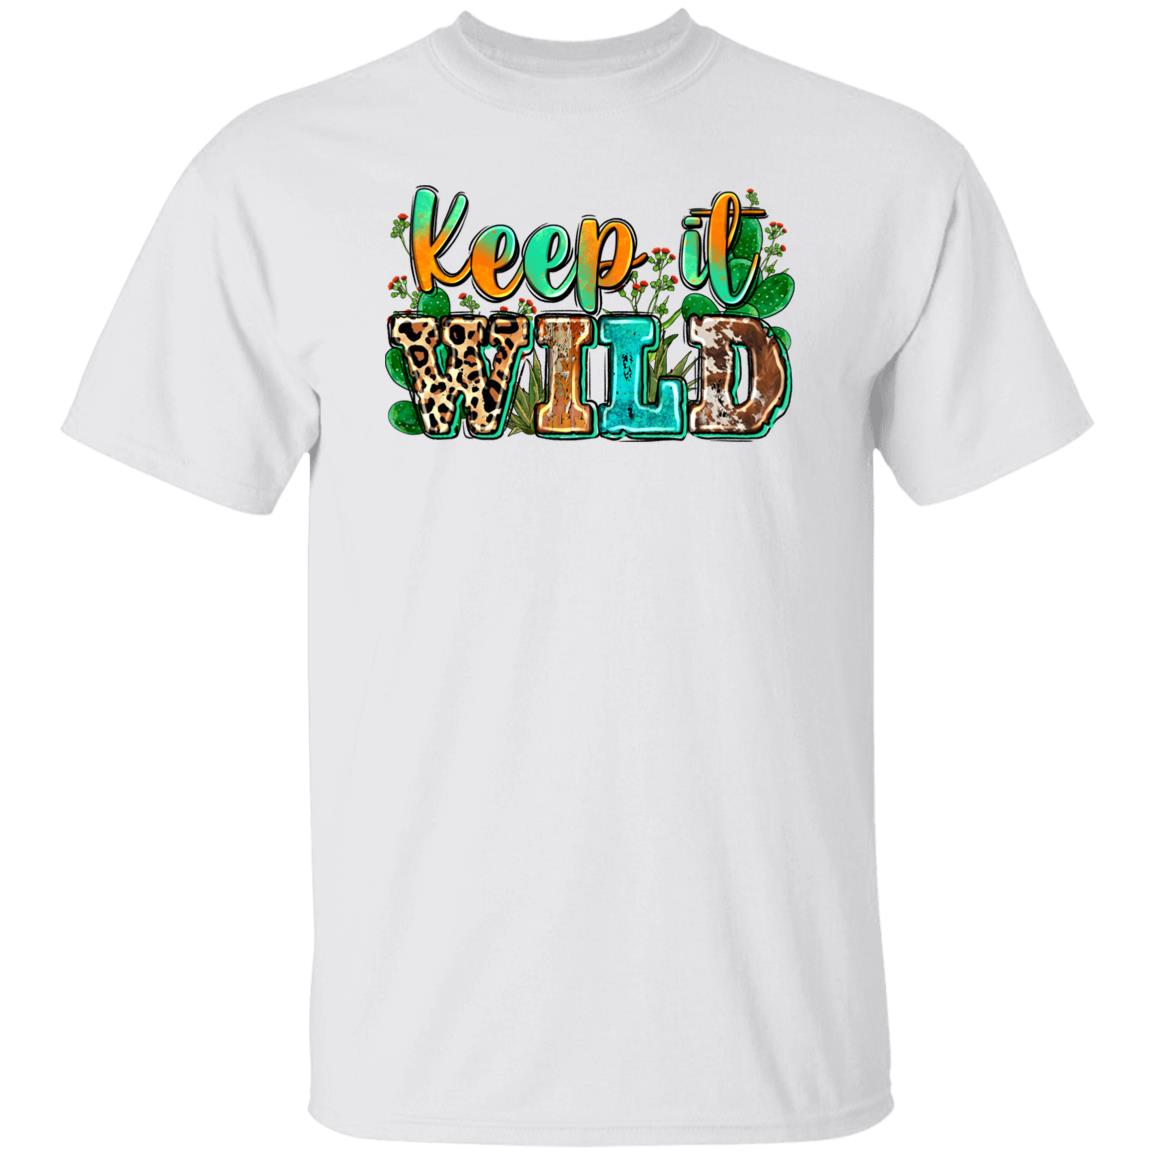 Keep it wild T-Shirt gift Cactus Western Arizona Unisex tee Sand White Sport Grey-Family-Gift-Planet